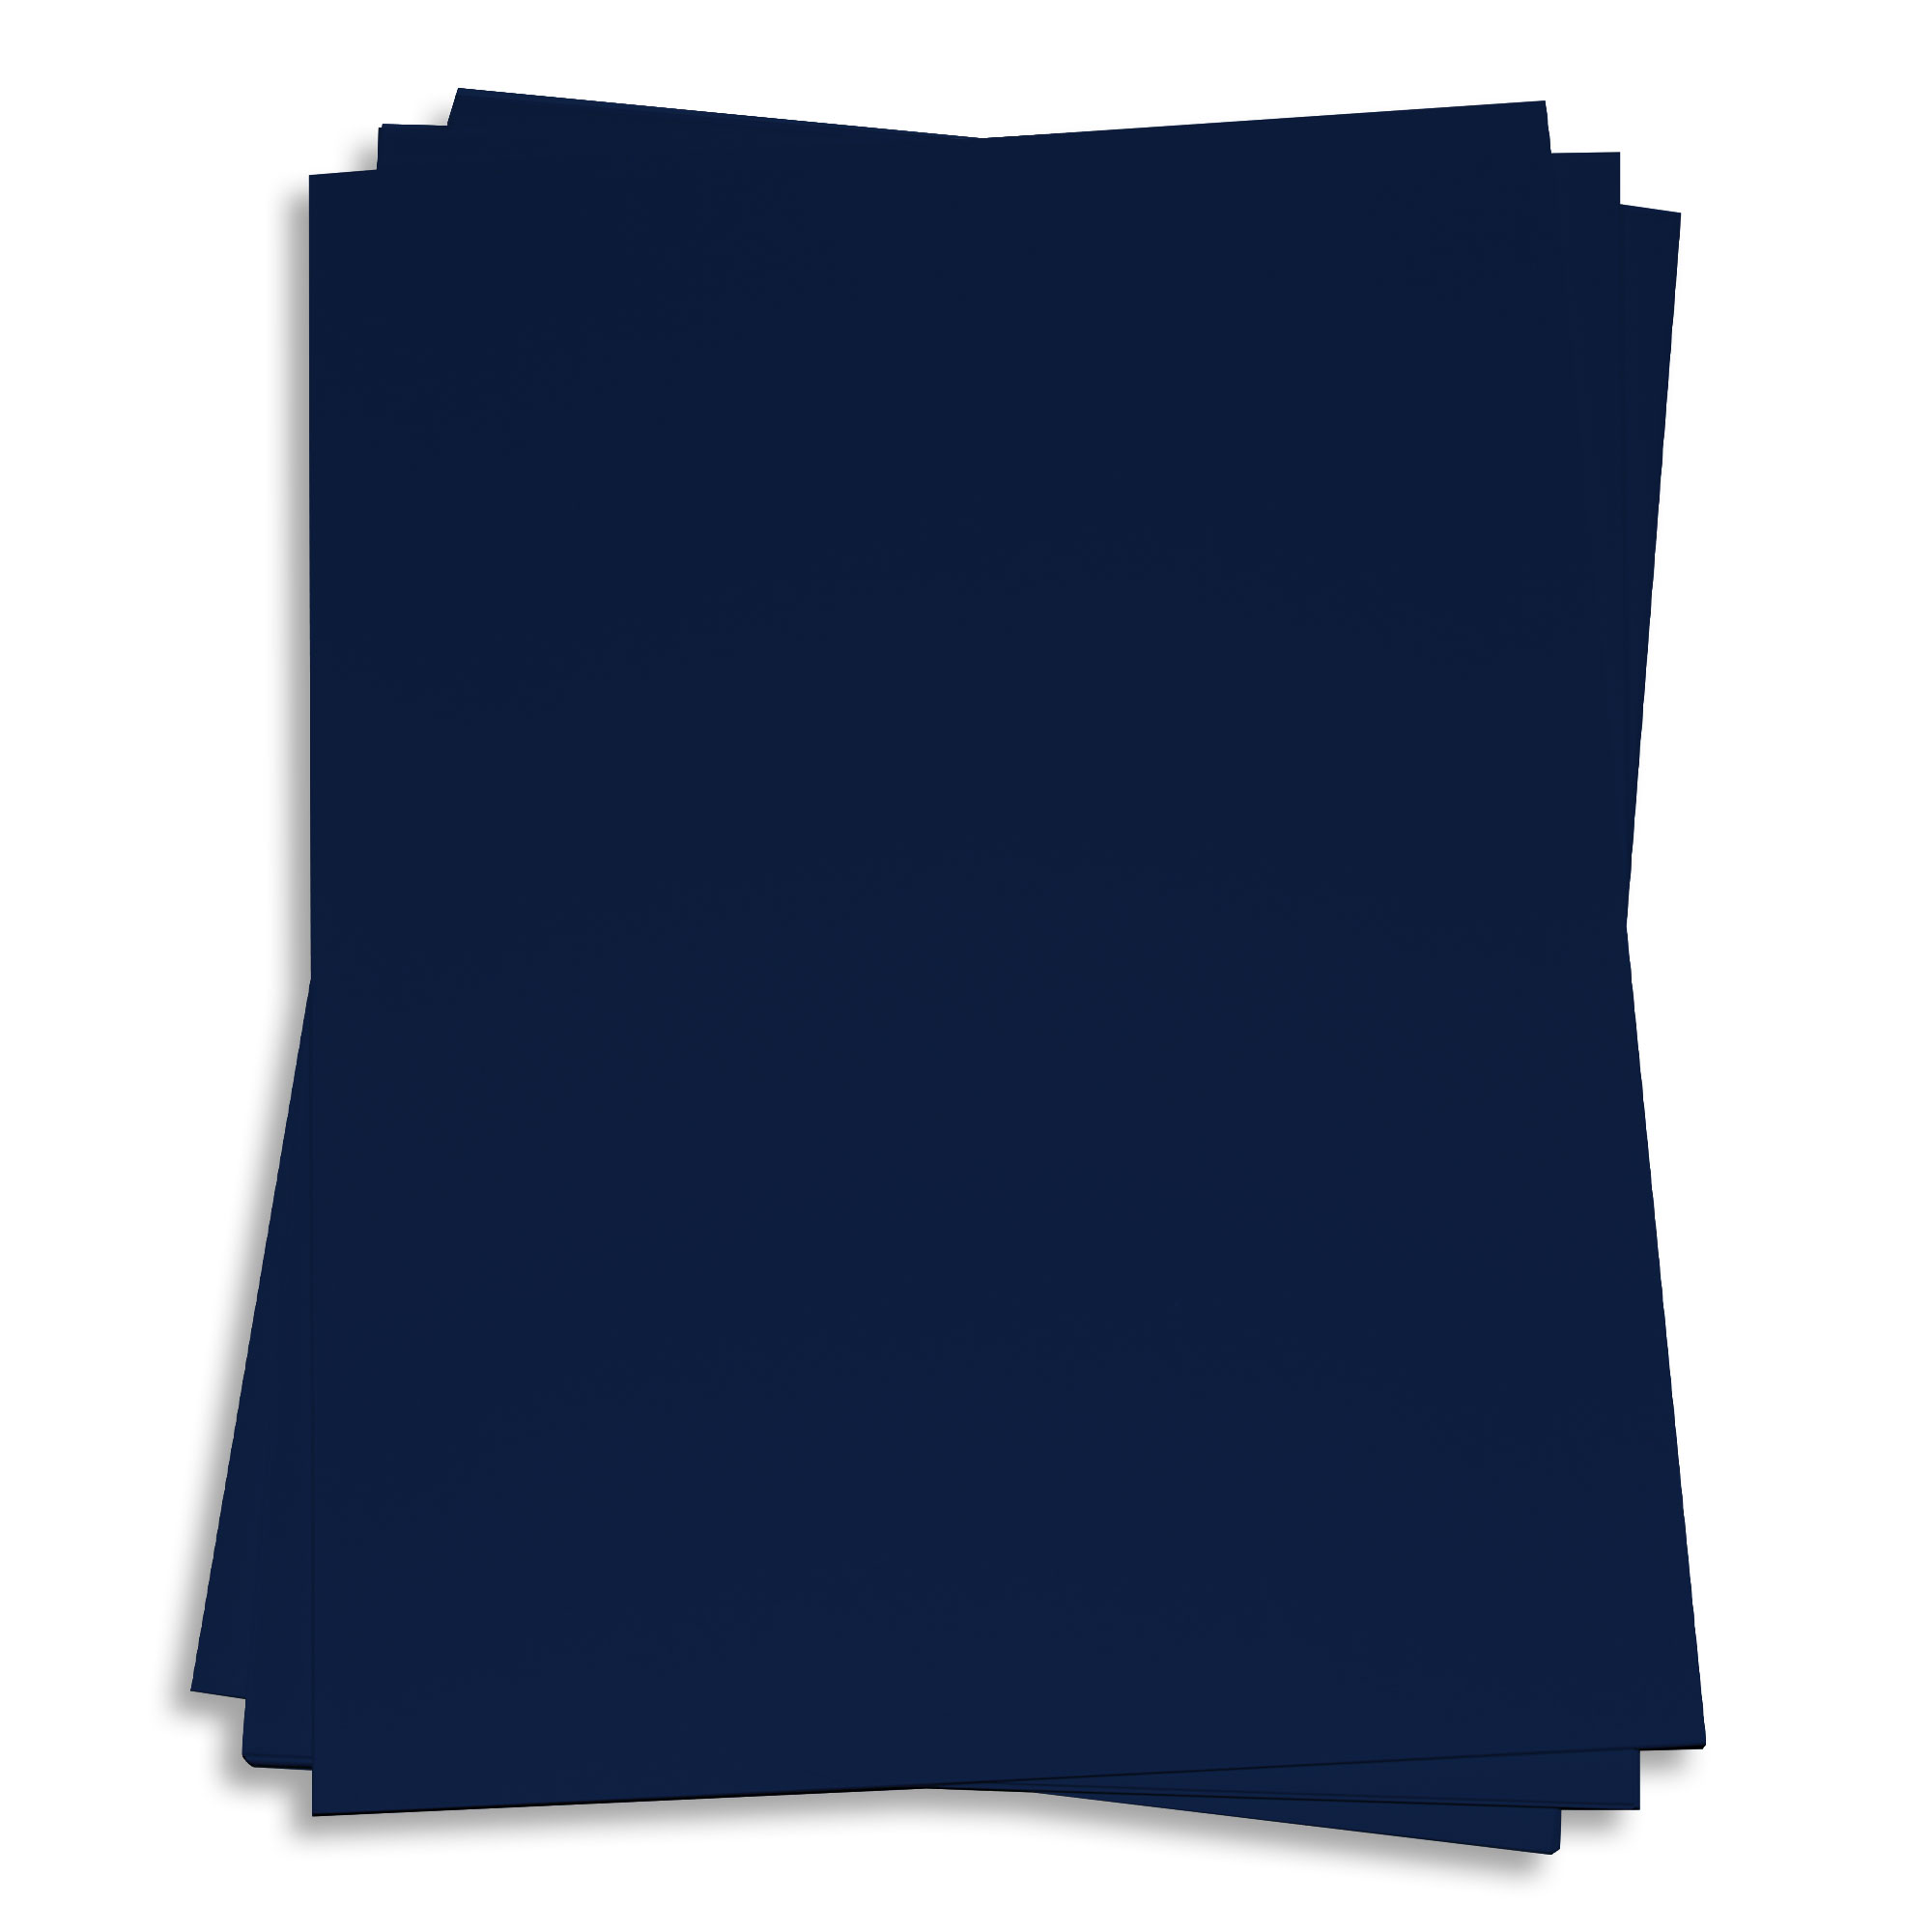 Midnight Blue Card Stock - 27 x 39 Gmund Colors Matt 111lb Cover